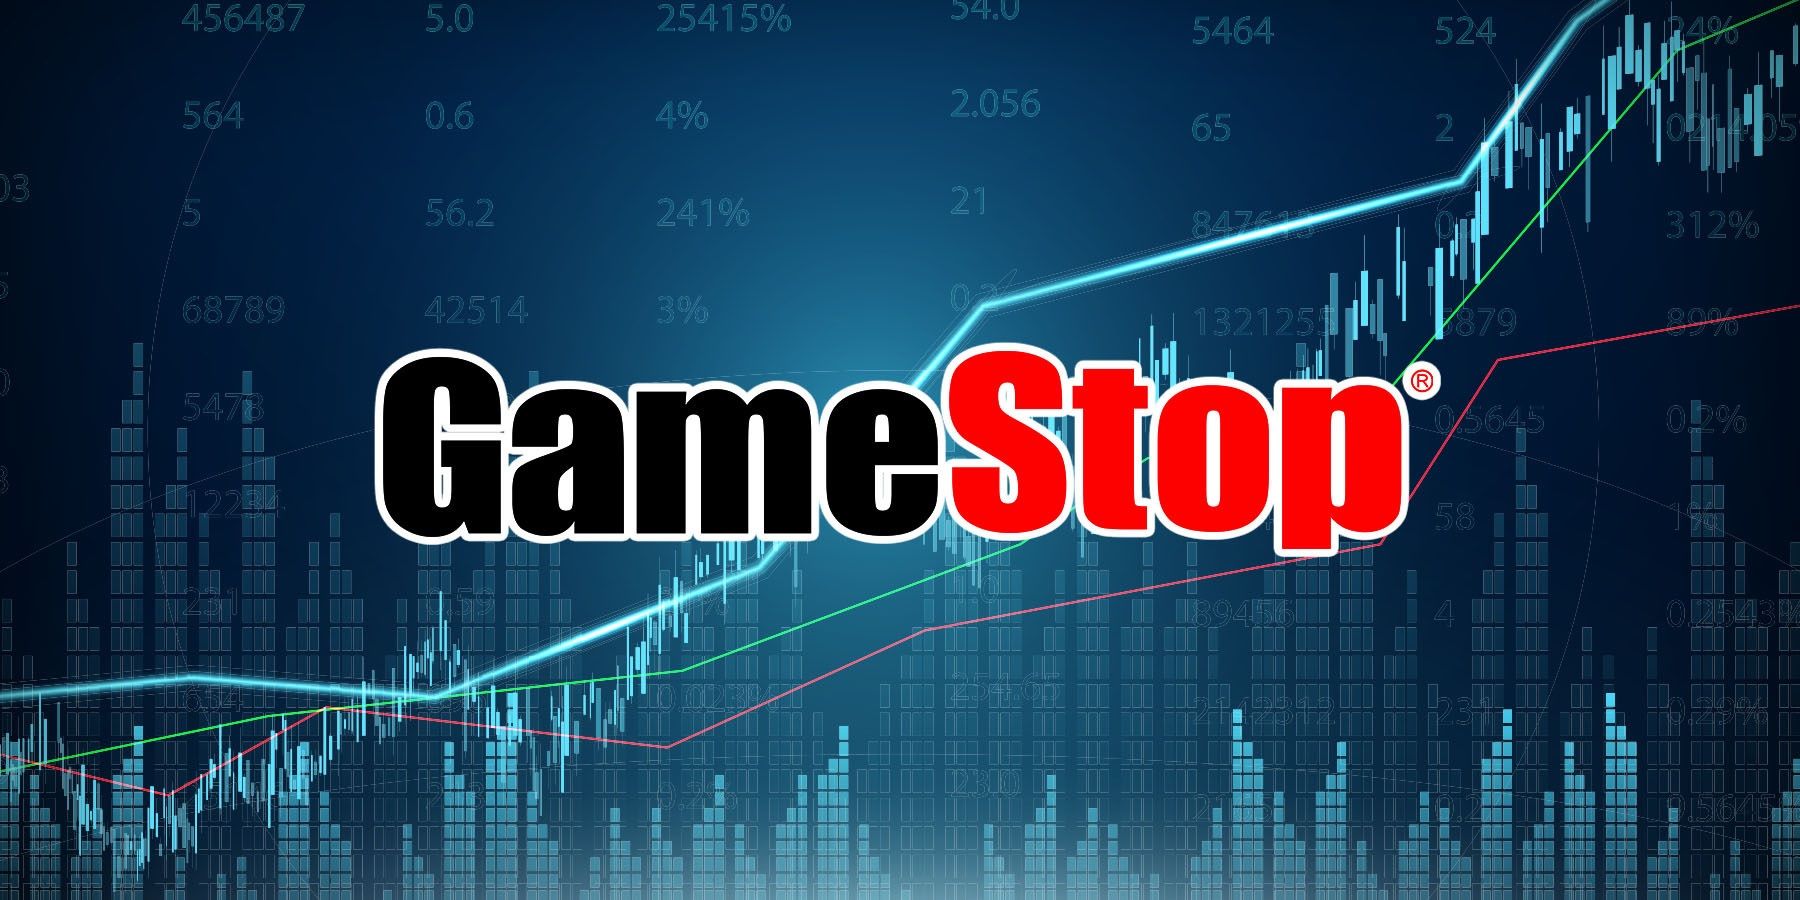 gamestop stock price up